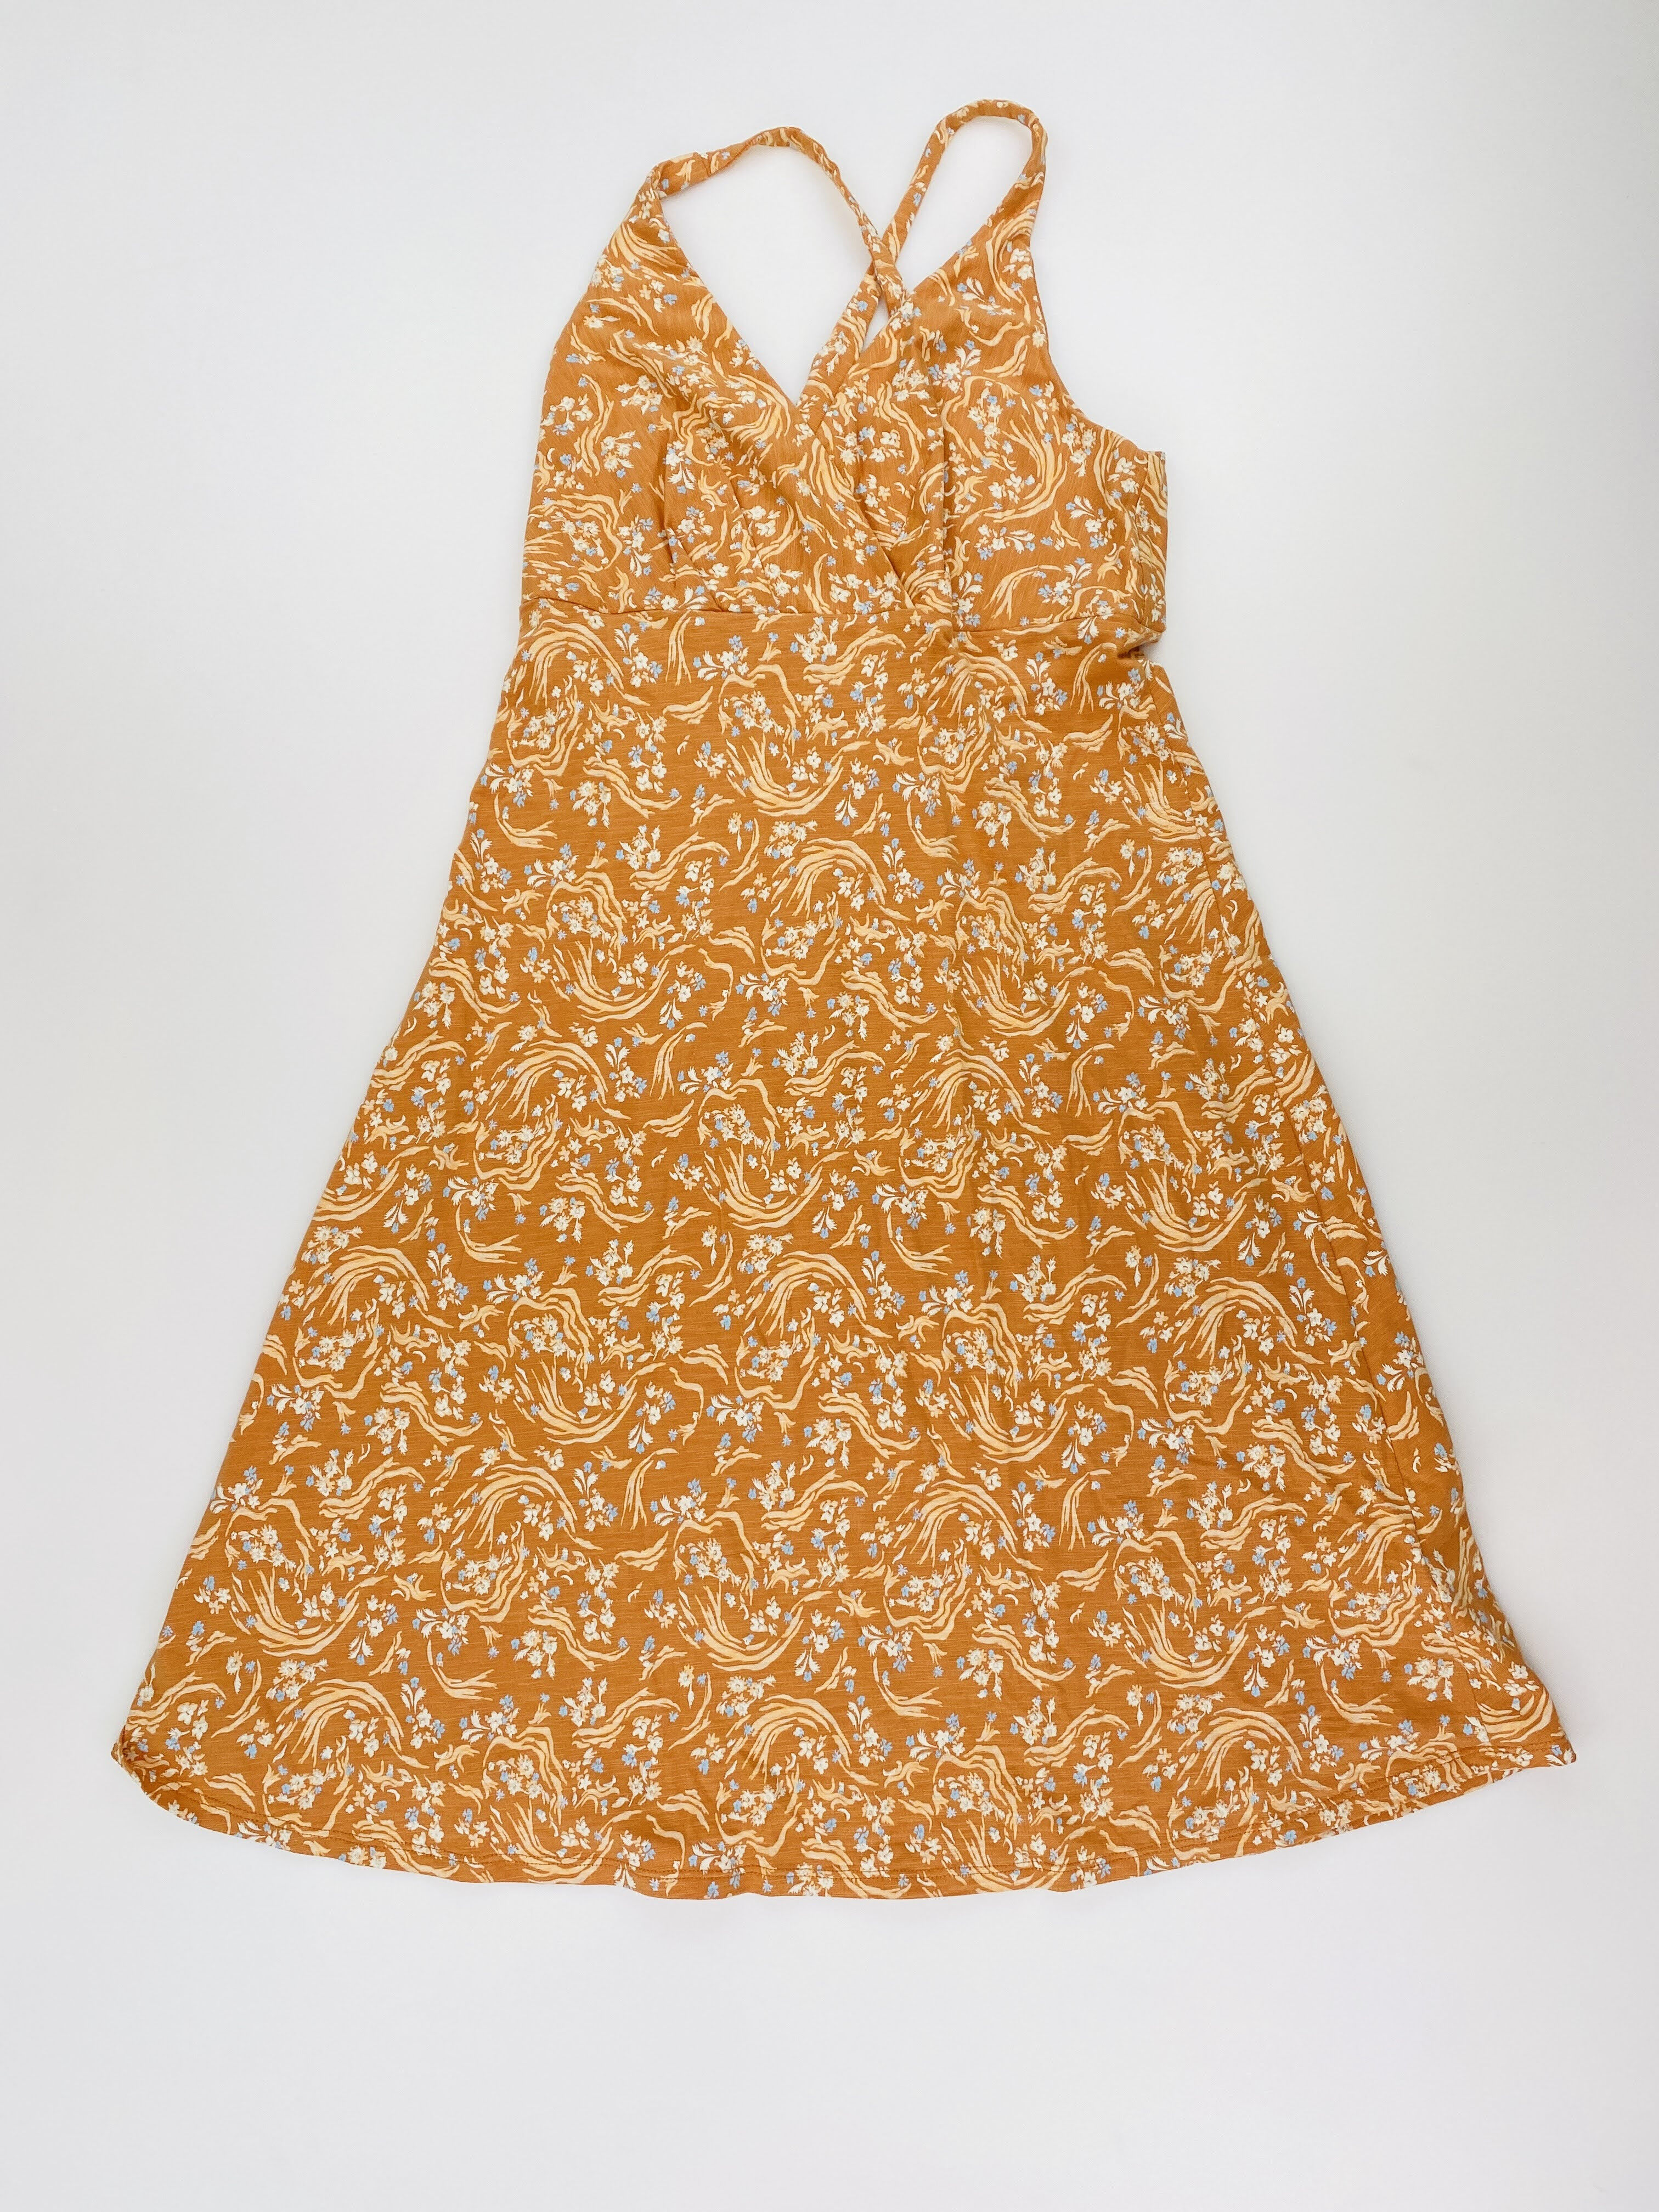 Patagonia W's Amber Dawn Dress - Seconde main Robe femme - Orange - S | Hardloop